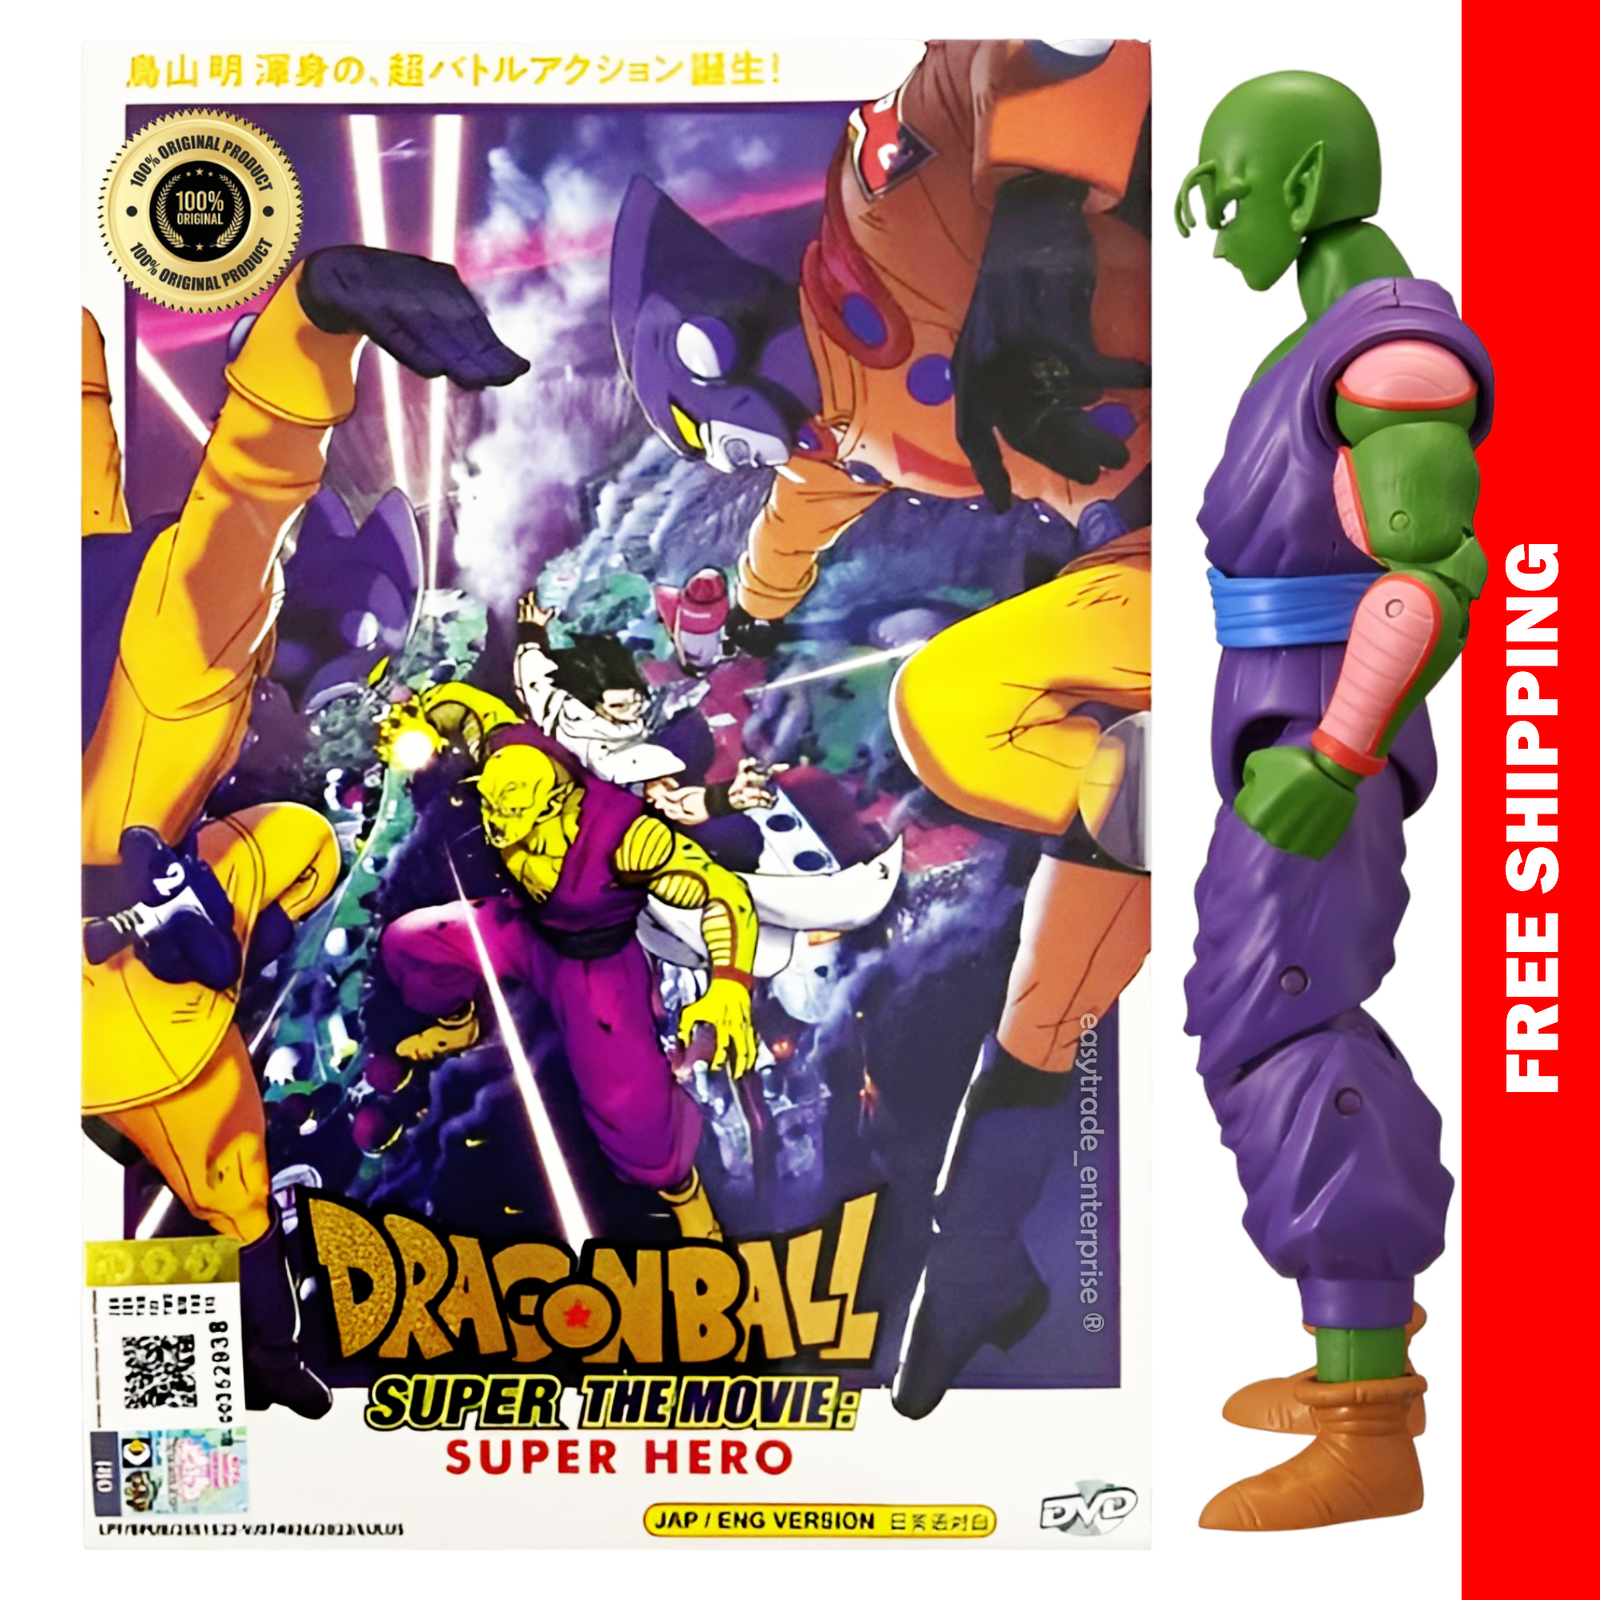 DRAGON BALL SUPER THE MOVIE : SUPER HERO ENGLISH SUBTITLE FREE SHIP ANIME DVD - $29.99